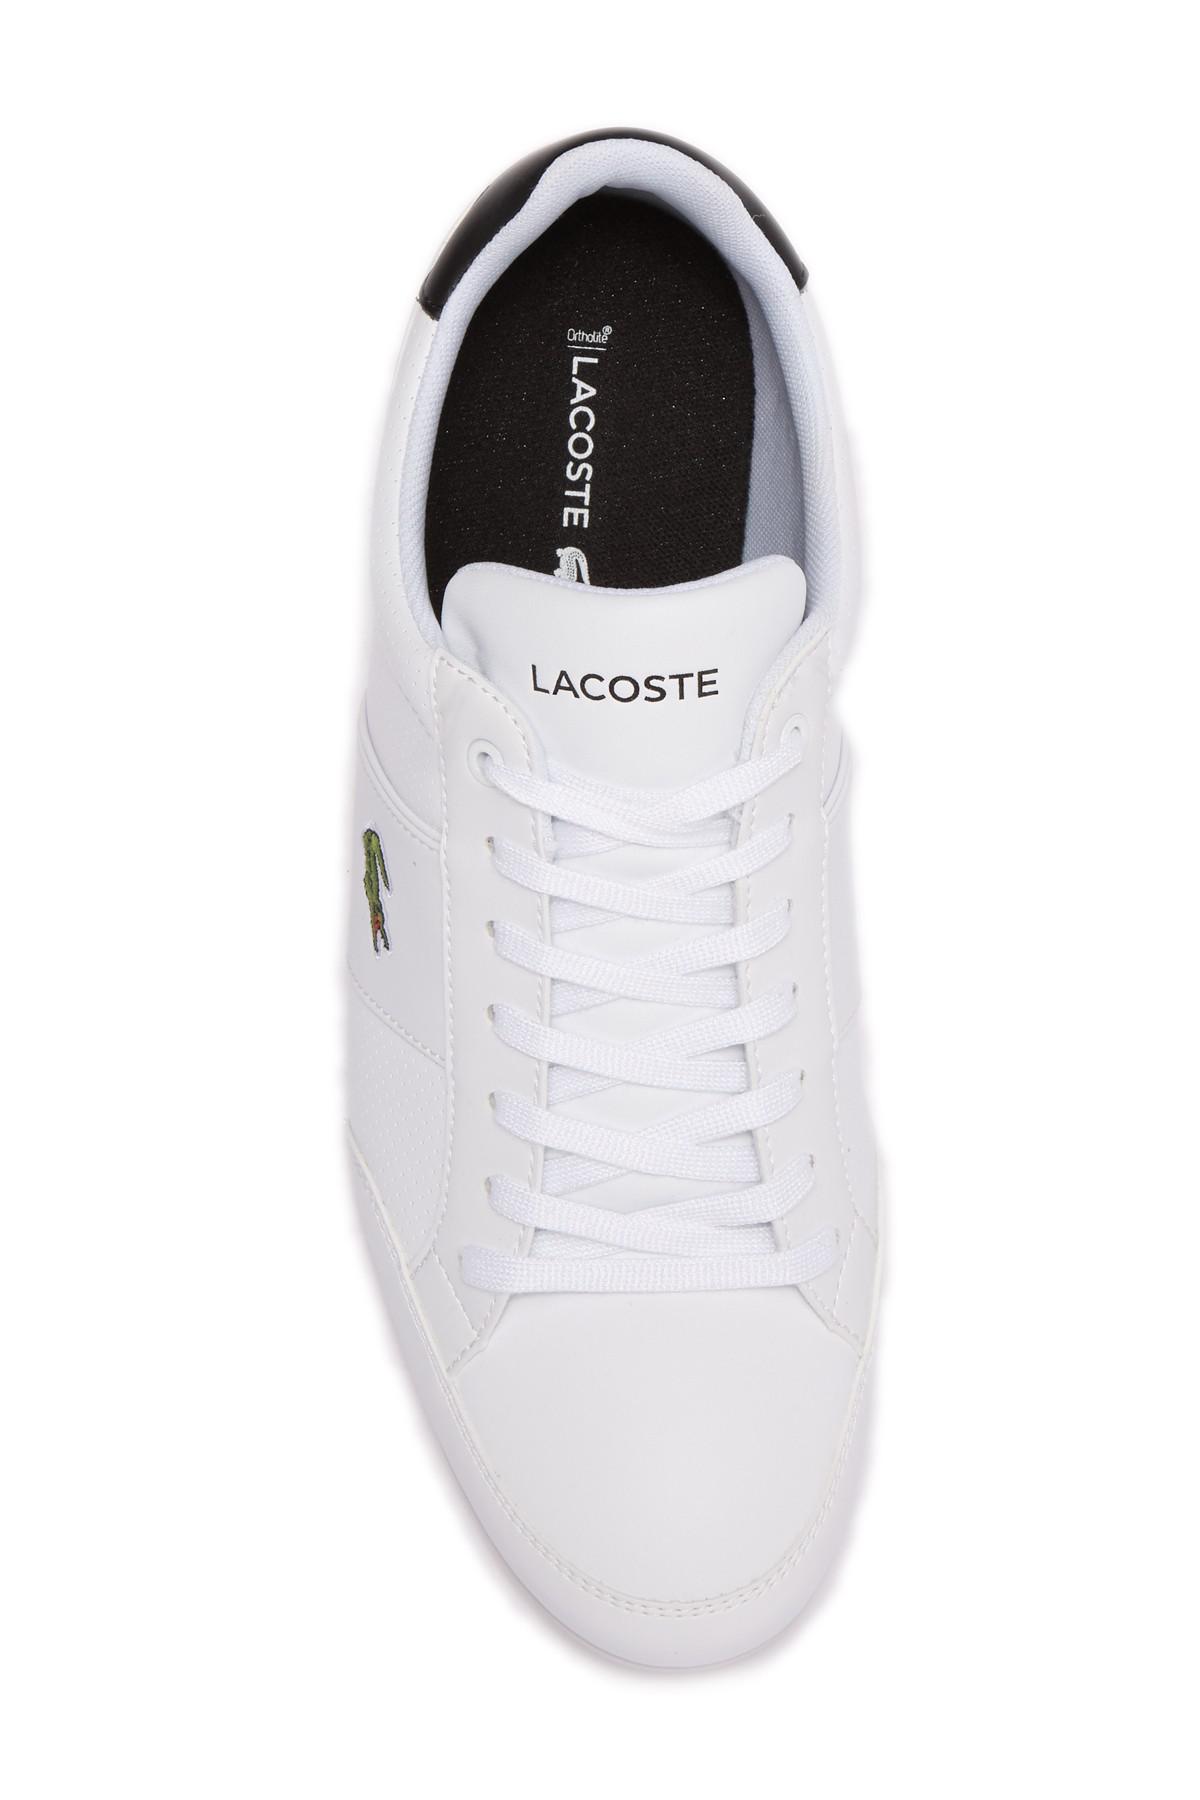 Lacoste Leather Nivolor 318 1 P Sneaker 